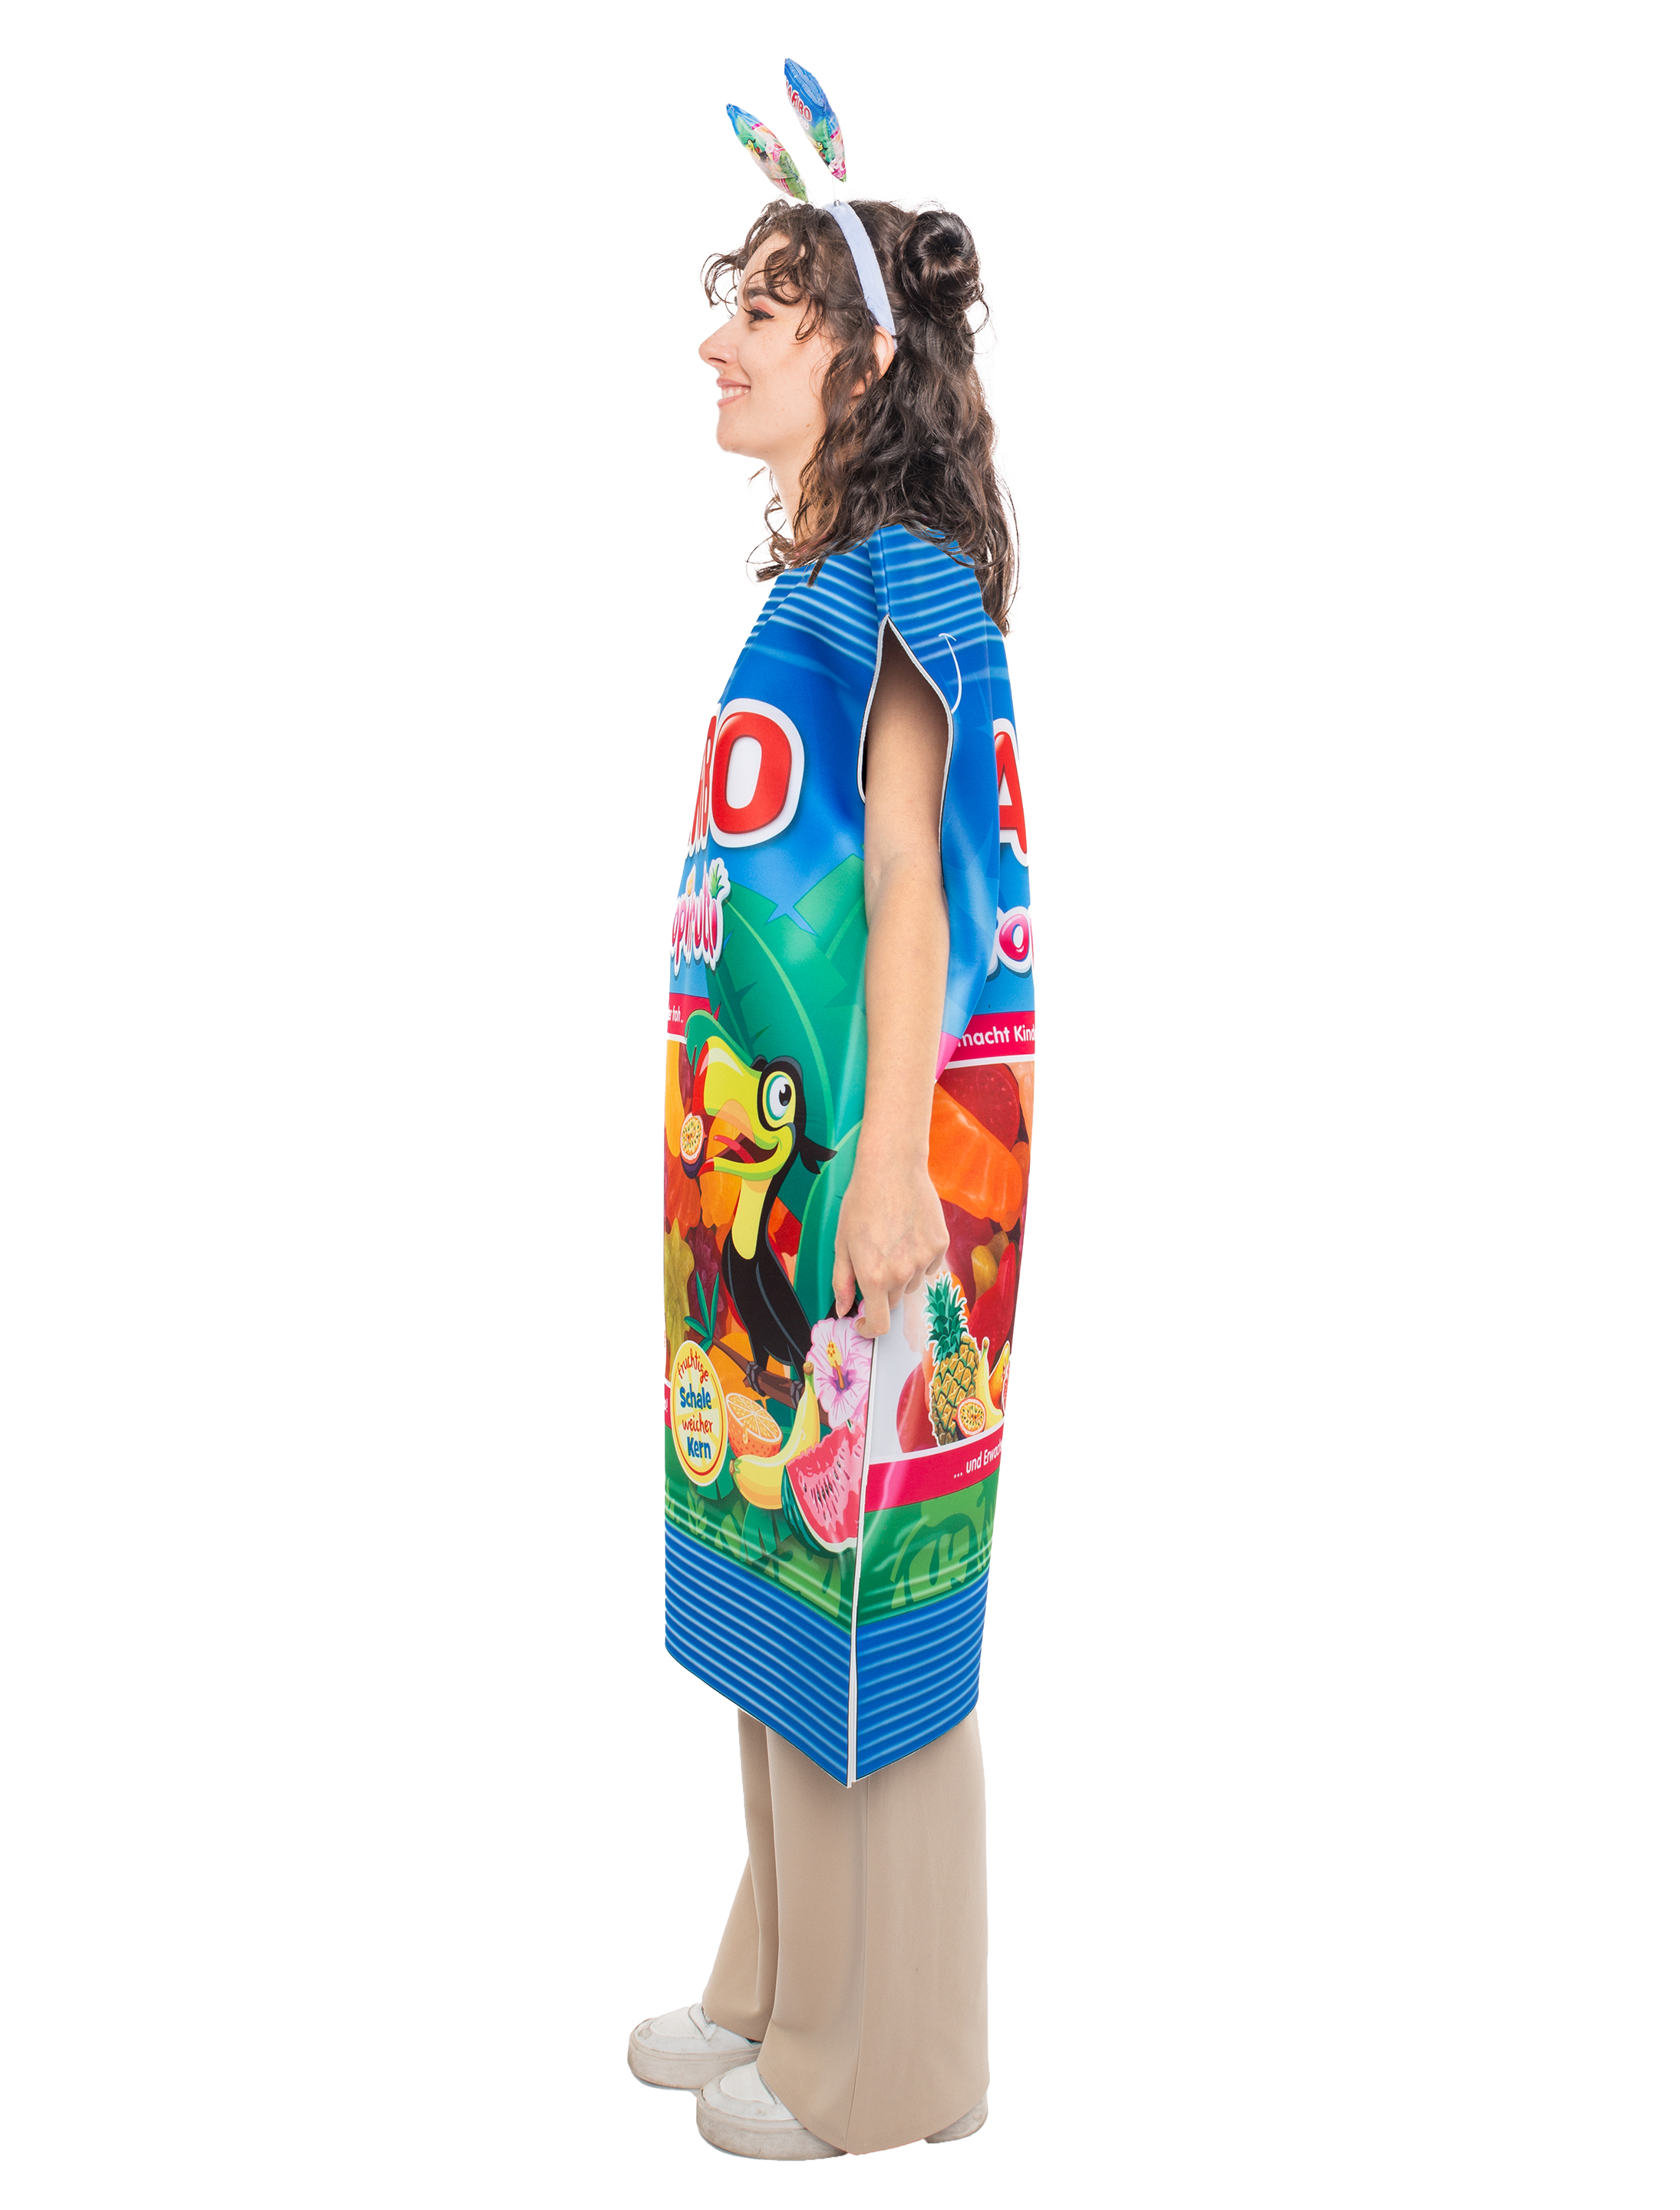 Kostüm HARIBO Tropifrutti Erwachsene bunt one size